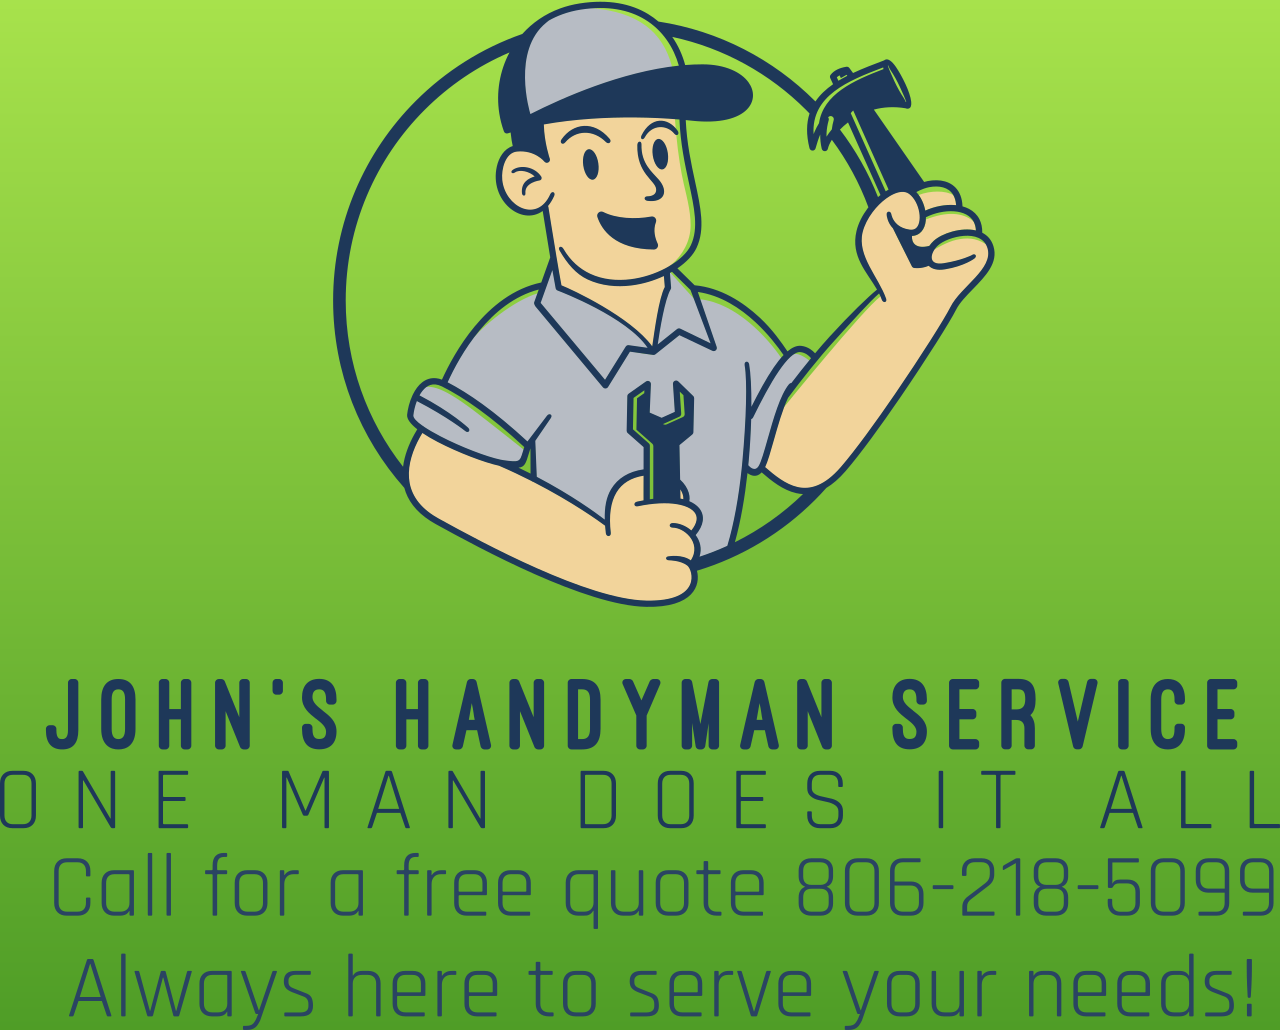 John's handyman service 's logo